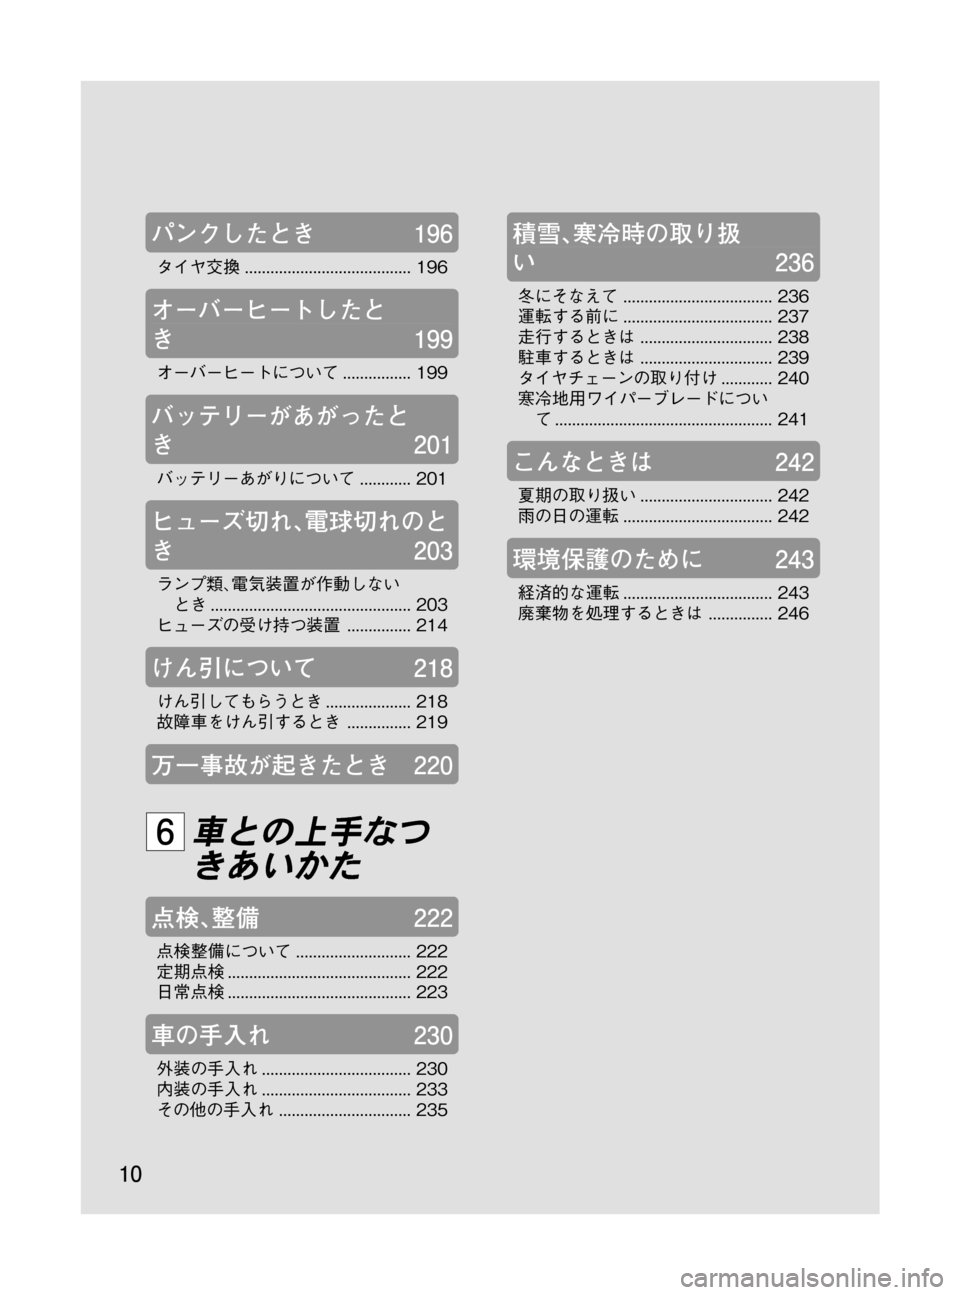 MAZDA MODEL BONGO TRACK 2016  取扱説明書 (in Japanese) Black plate (10,1)
パンクしたとき196
タイヤ交換....................................... 196
オーバーヒートしたと
き199
オーバーヒートについて................ 199
バ�